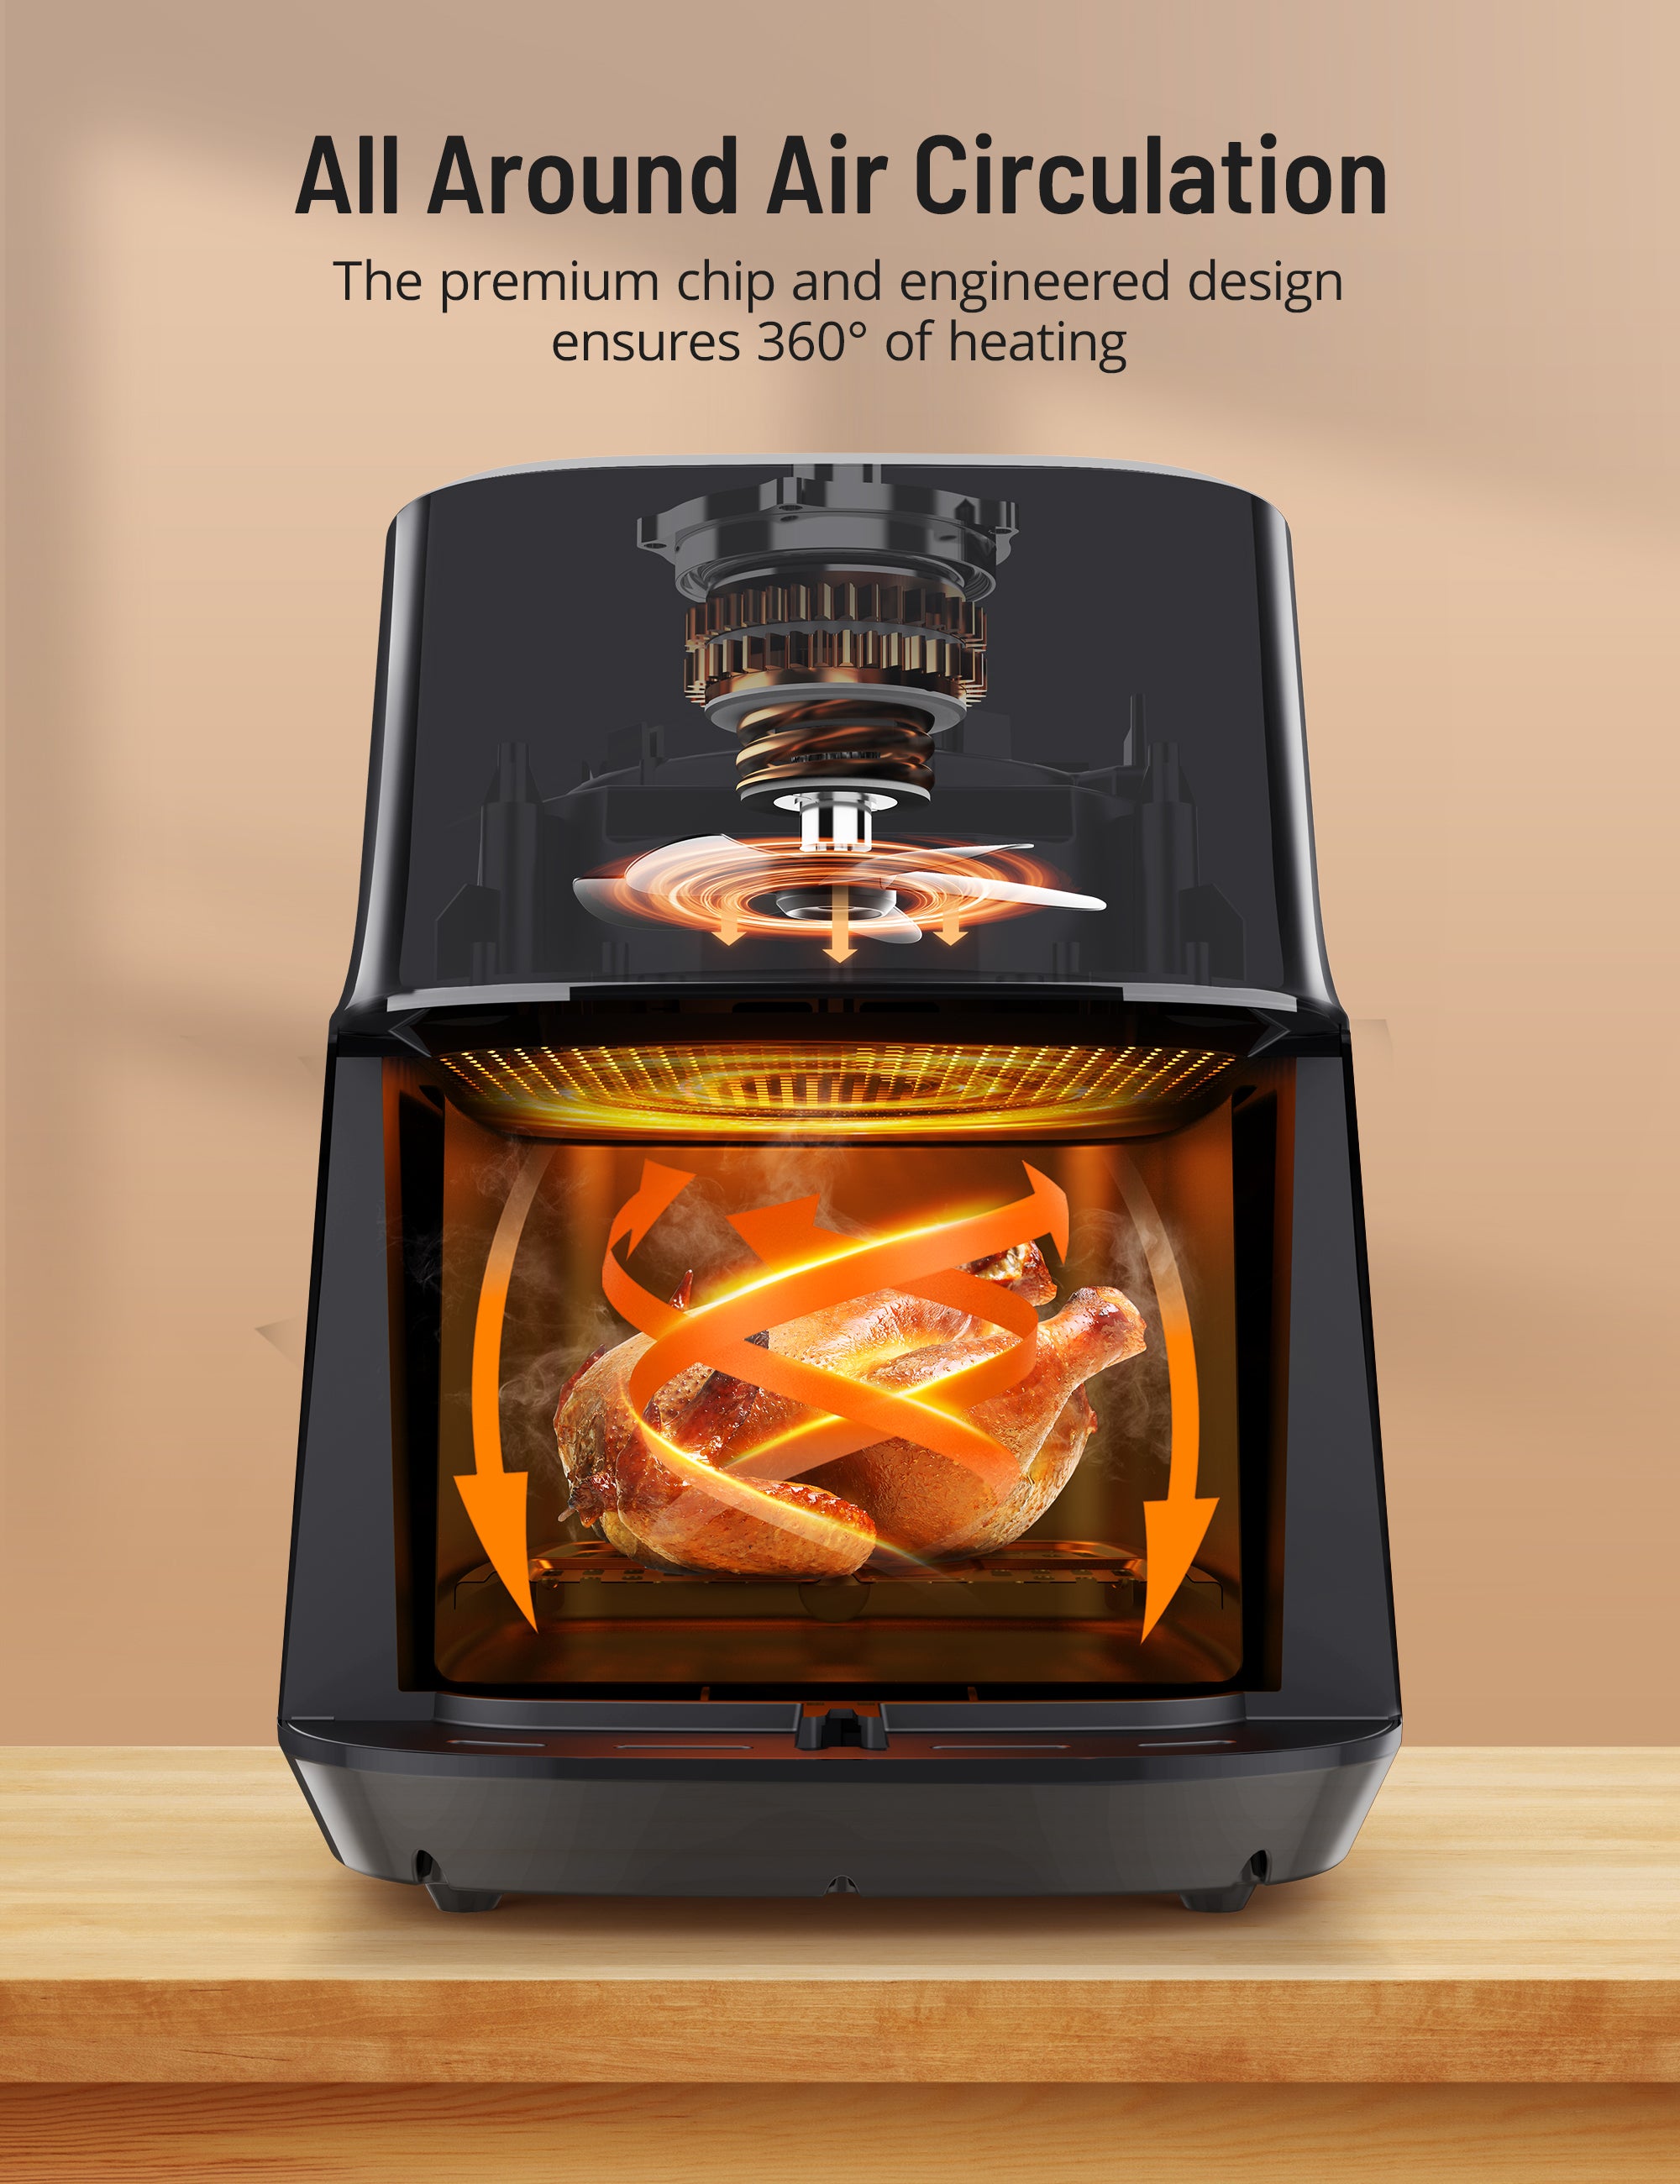 Paris Rh?ne Air Fryer Oven AF014, 5.3 Quart With 8-in-1 Toaster Oven Cooker 2024